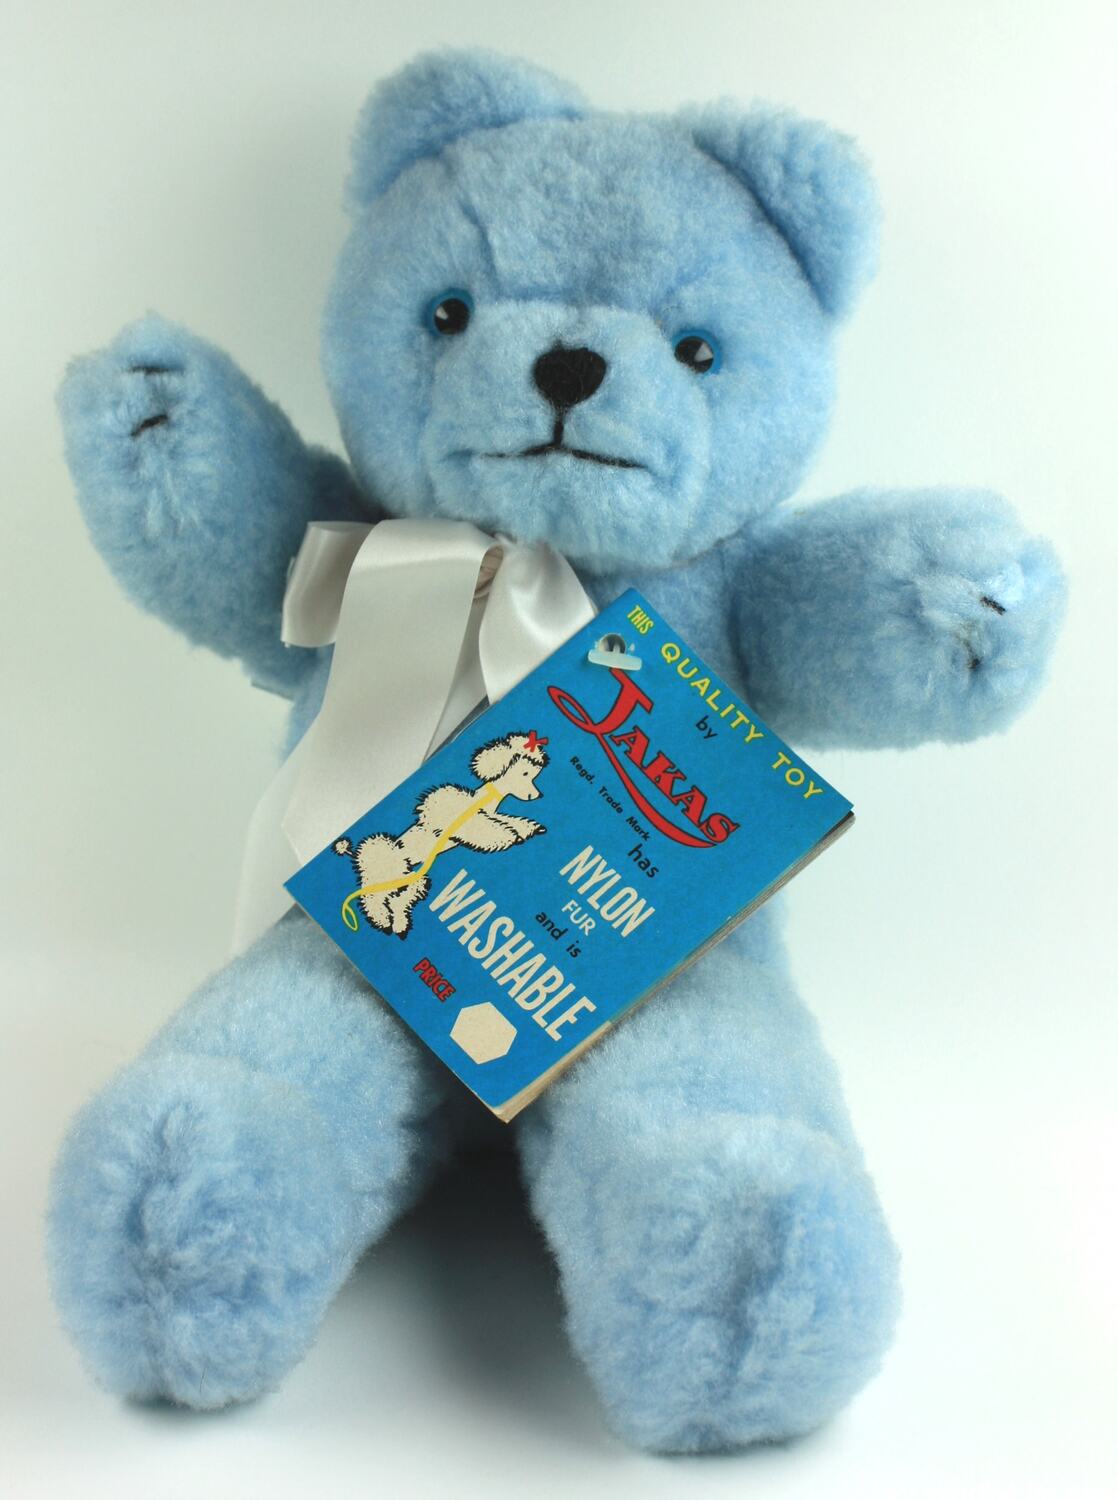 Teddy Bear - JakasToys, Light Blue 'Cuddle Bear', Melbourne, 1970s